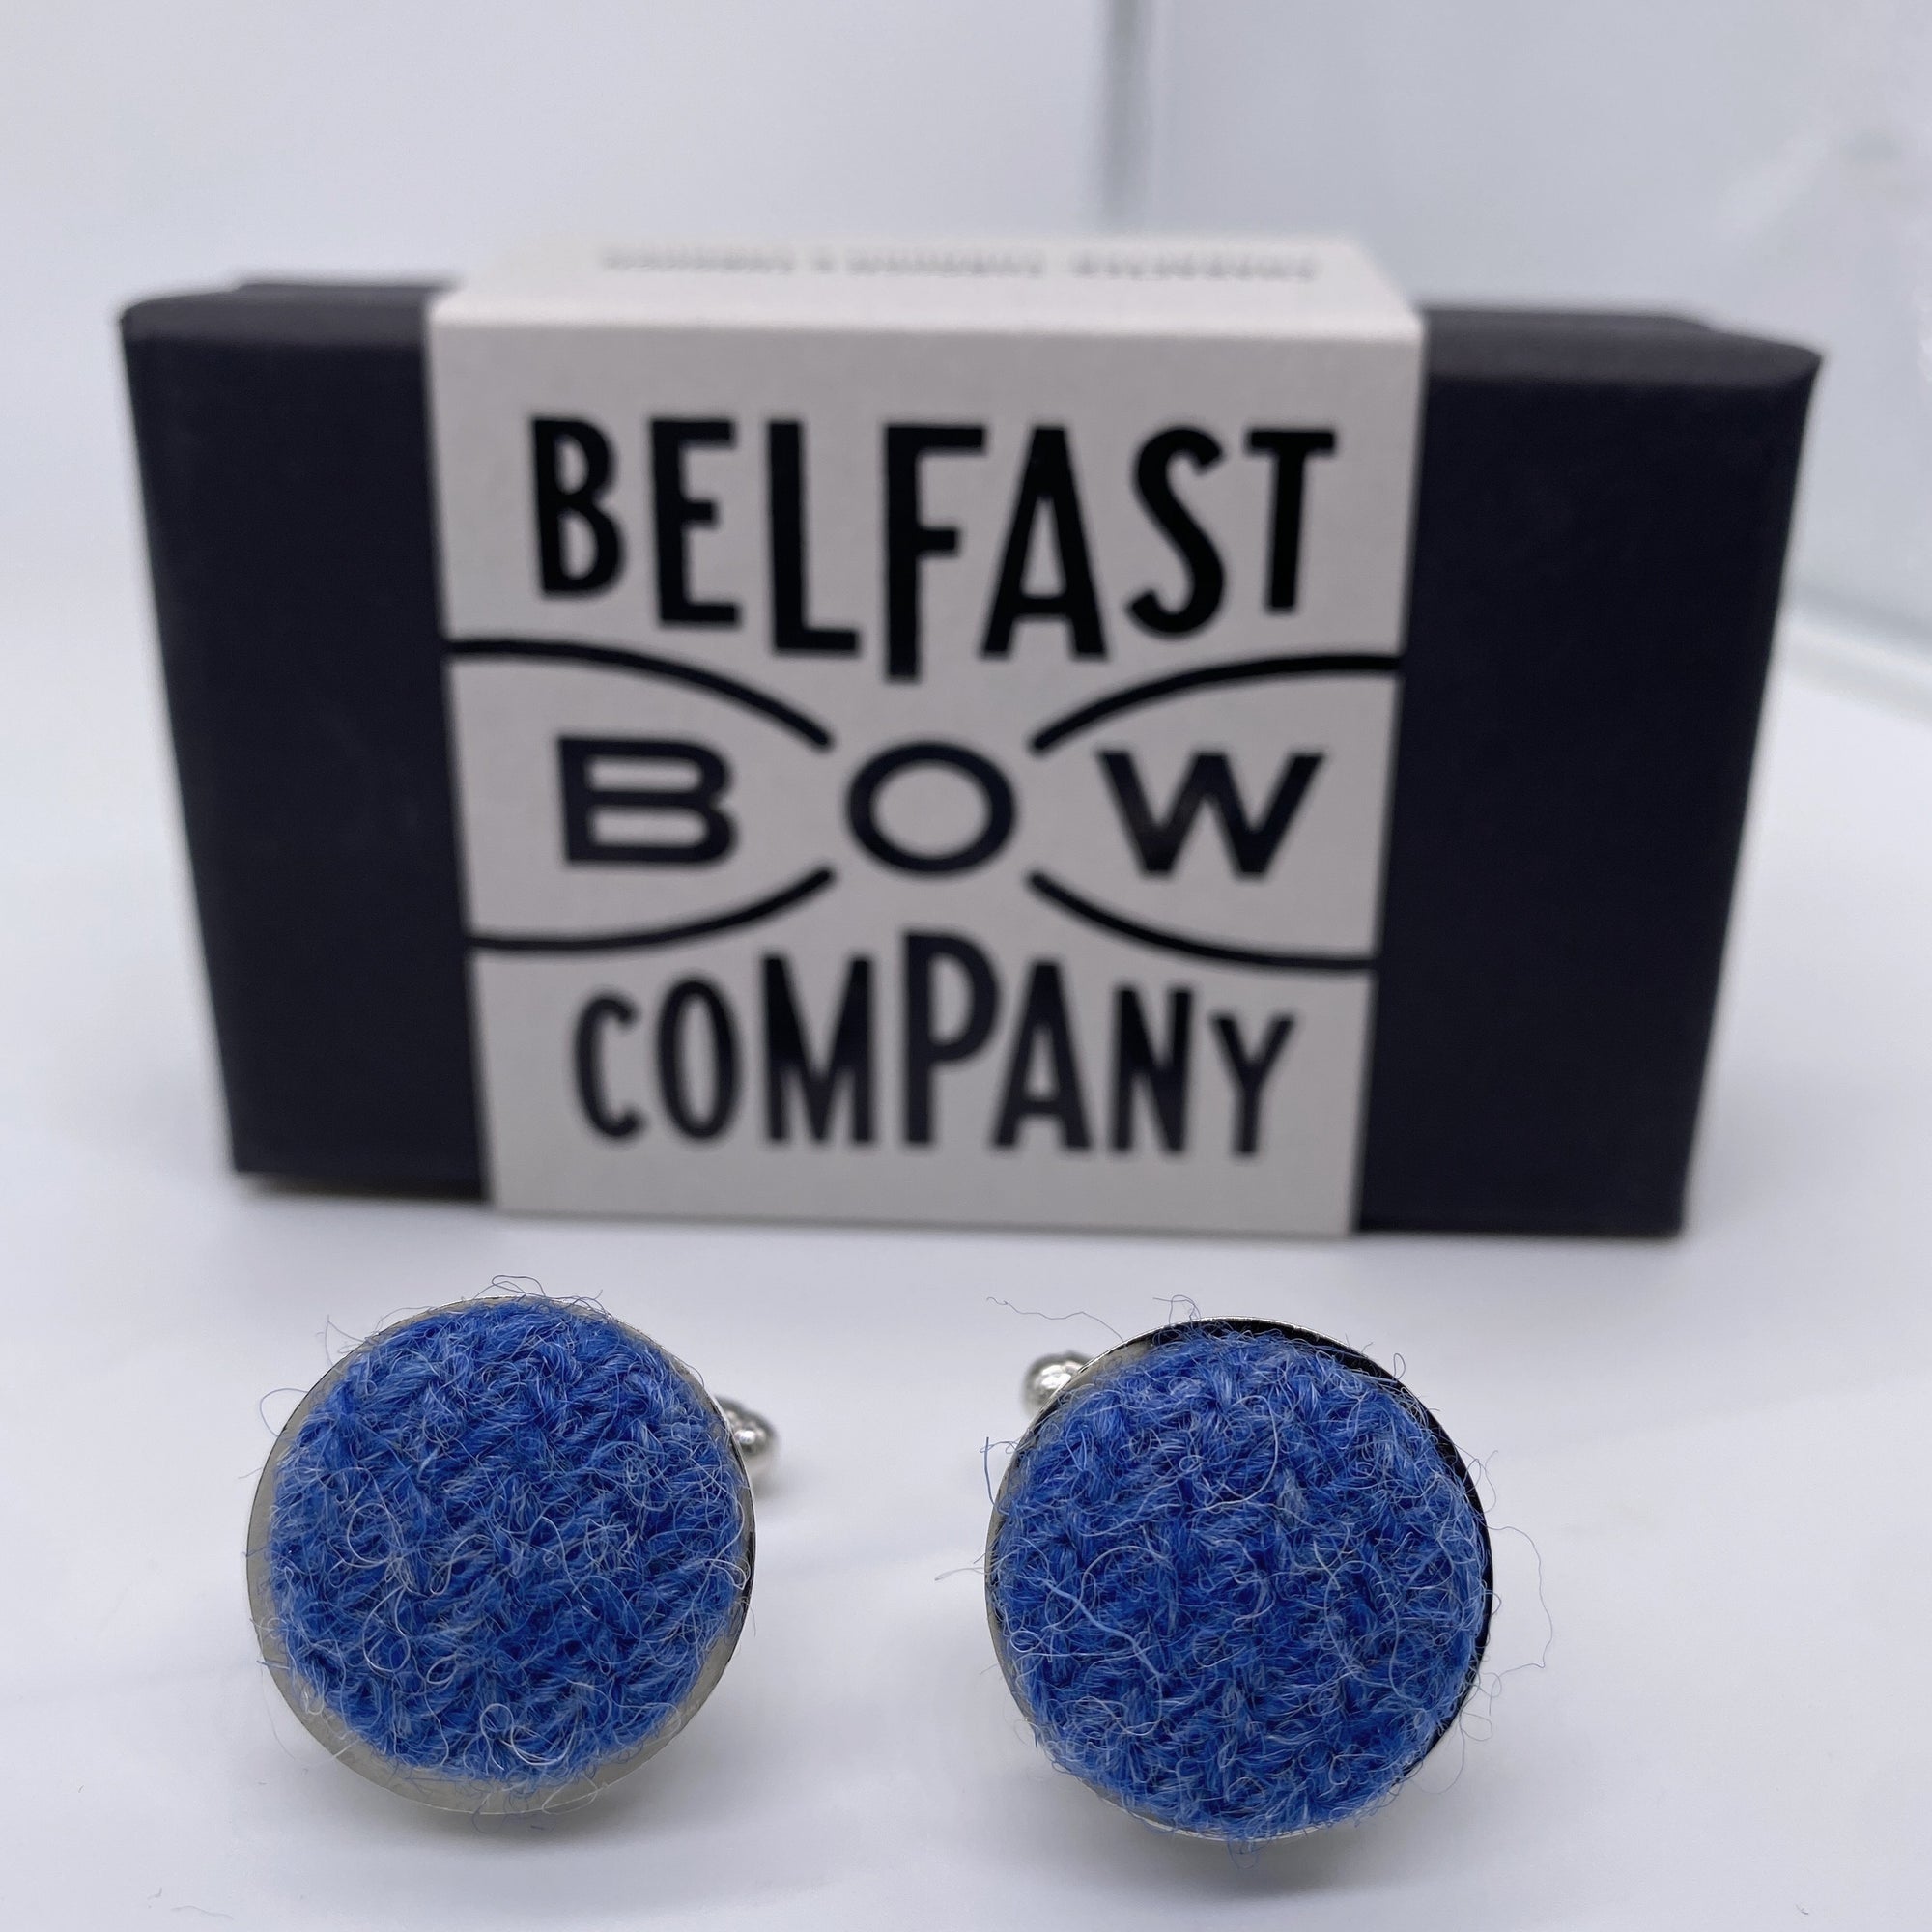 Harris Tweed Cufflinks in Blue by the Belfast Bow Company